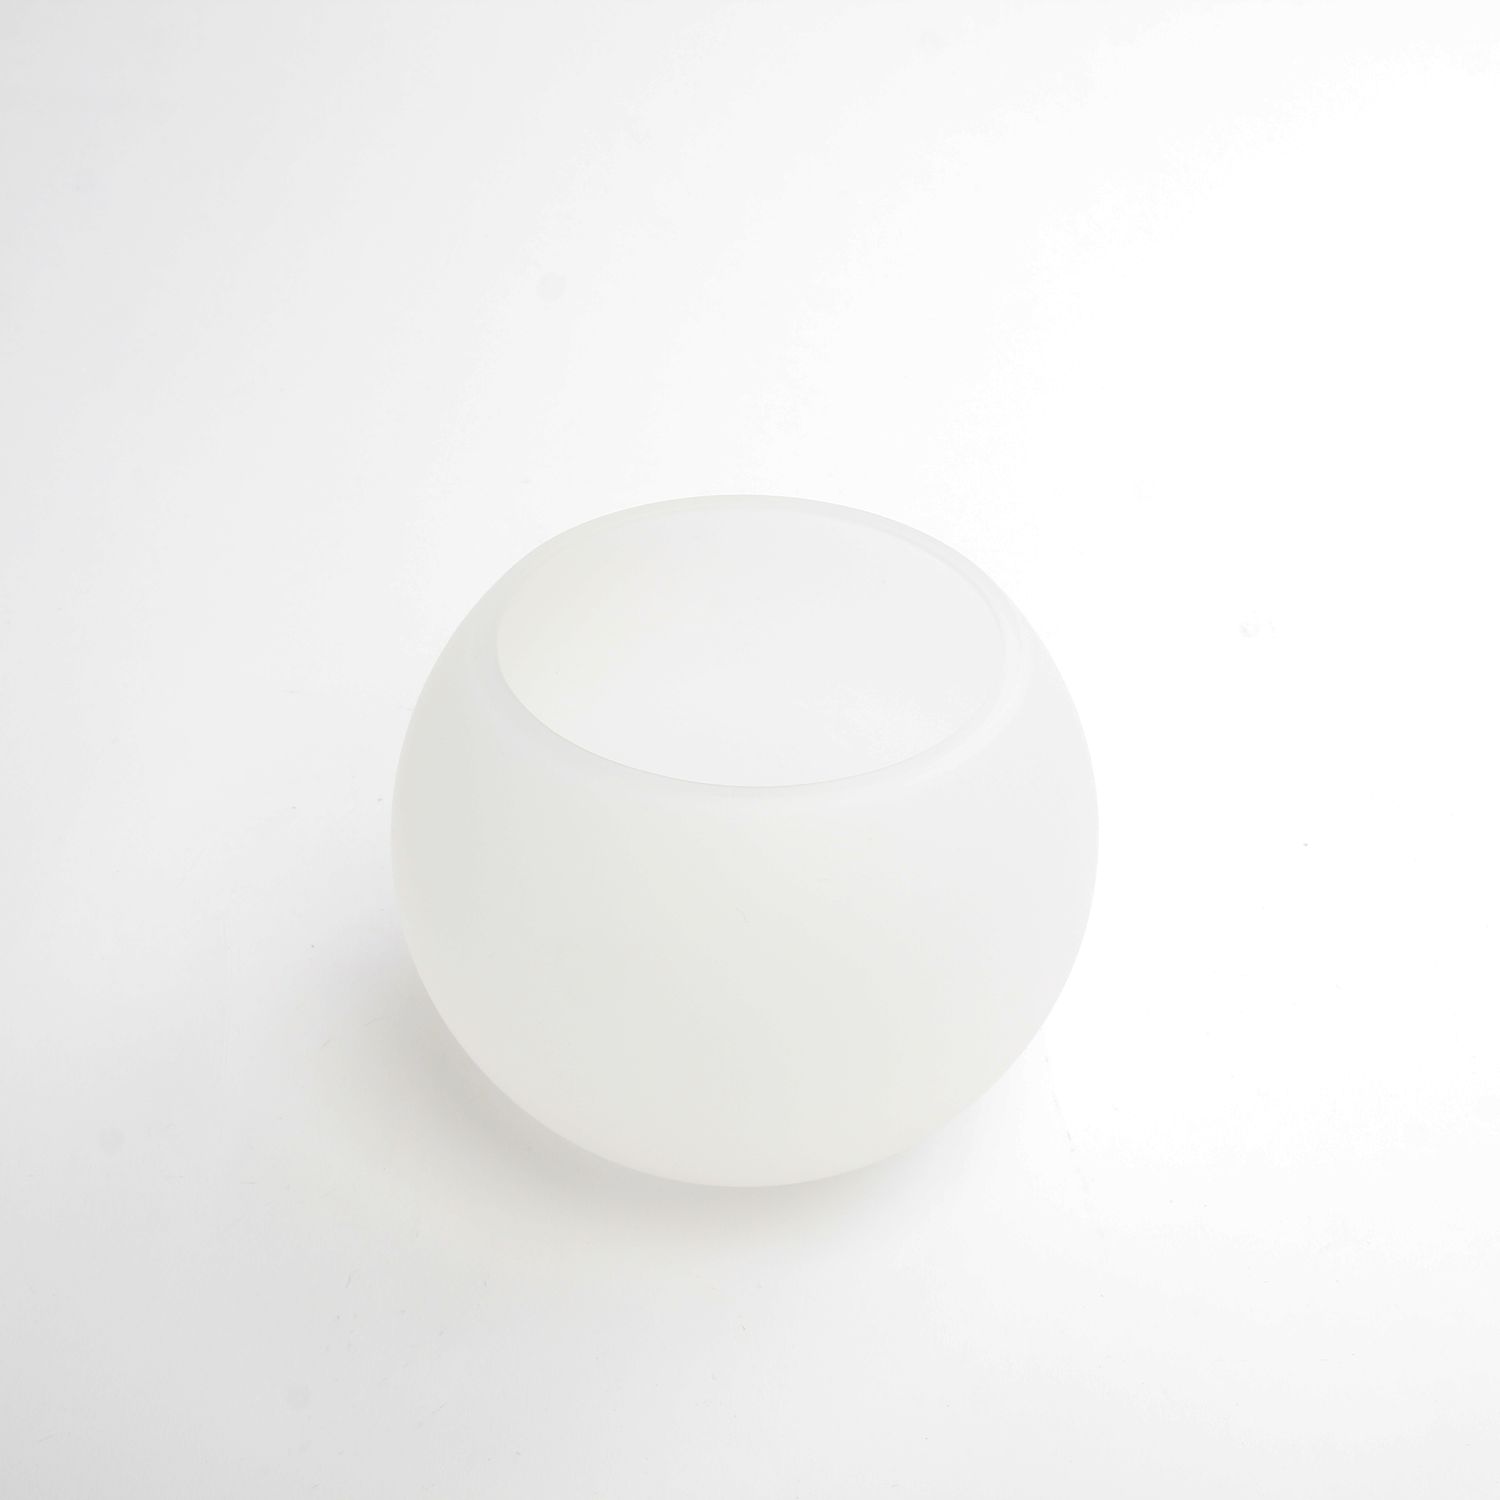 Soffi Studio: Medium White Vase Product Image 3 of 3